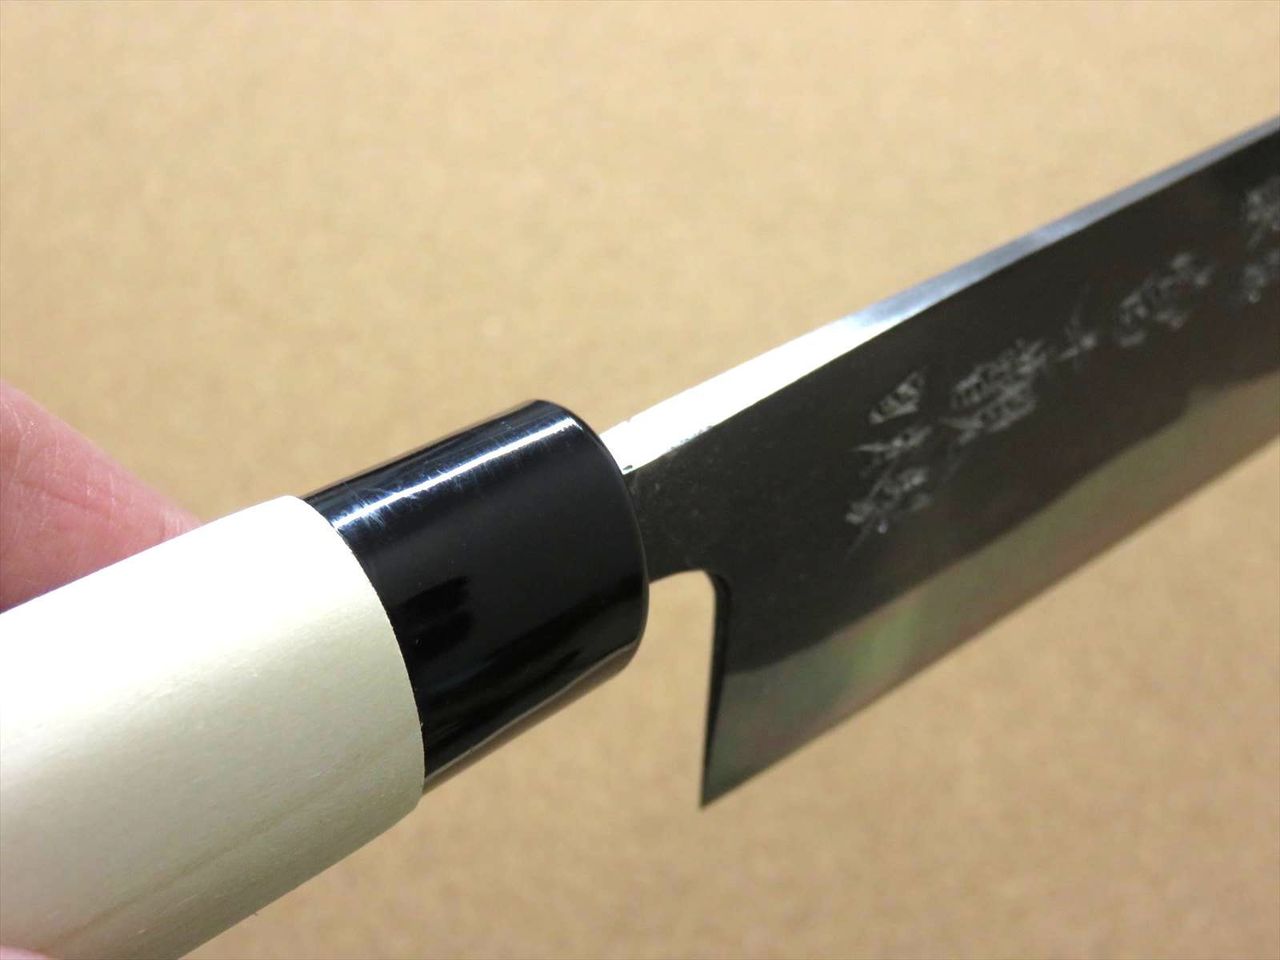 Japanese Kitchen Nakiri Vegetable Knife 7.1 inch Kuro-Uchi Blue Steel #2 JAPAN